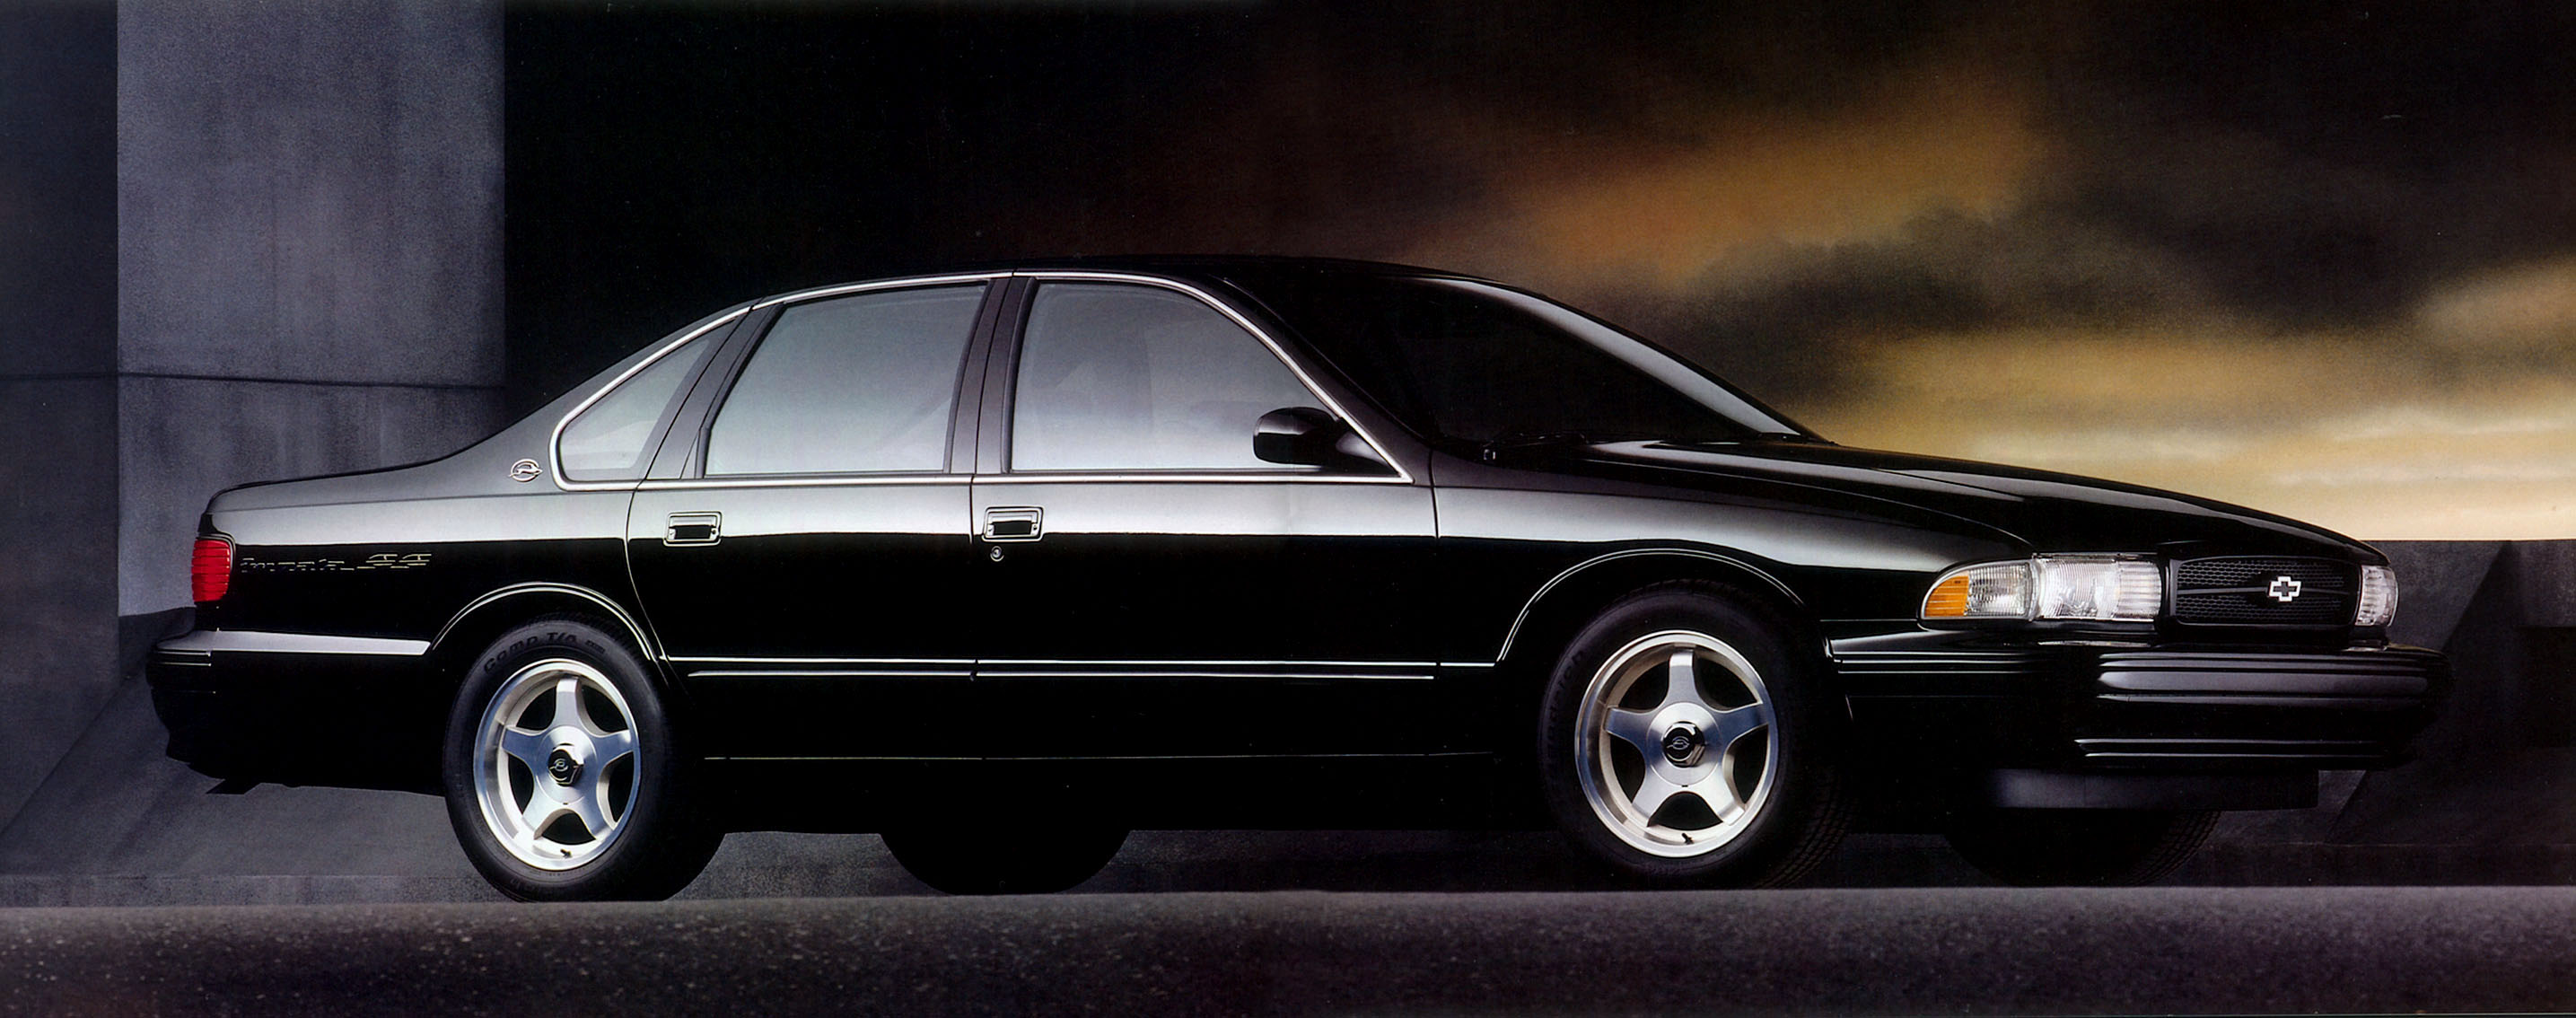 1995_Chevrolet_Impala_SS-06-07